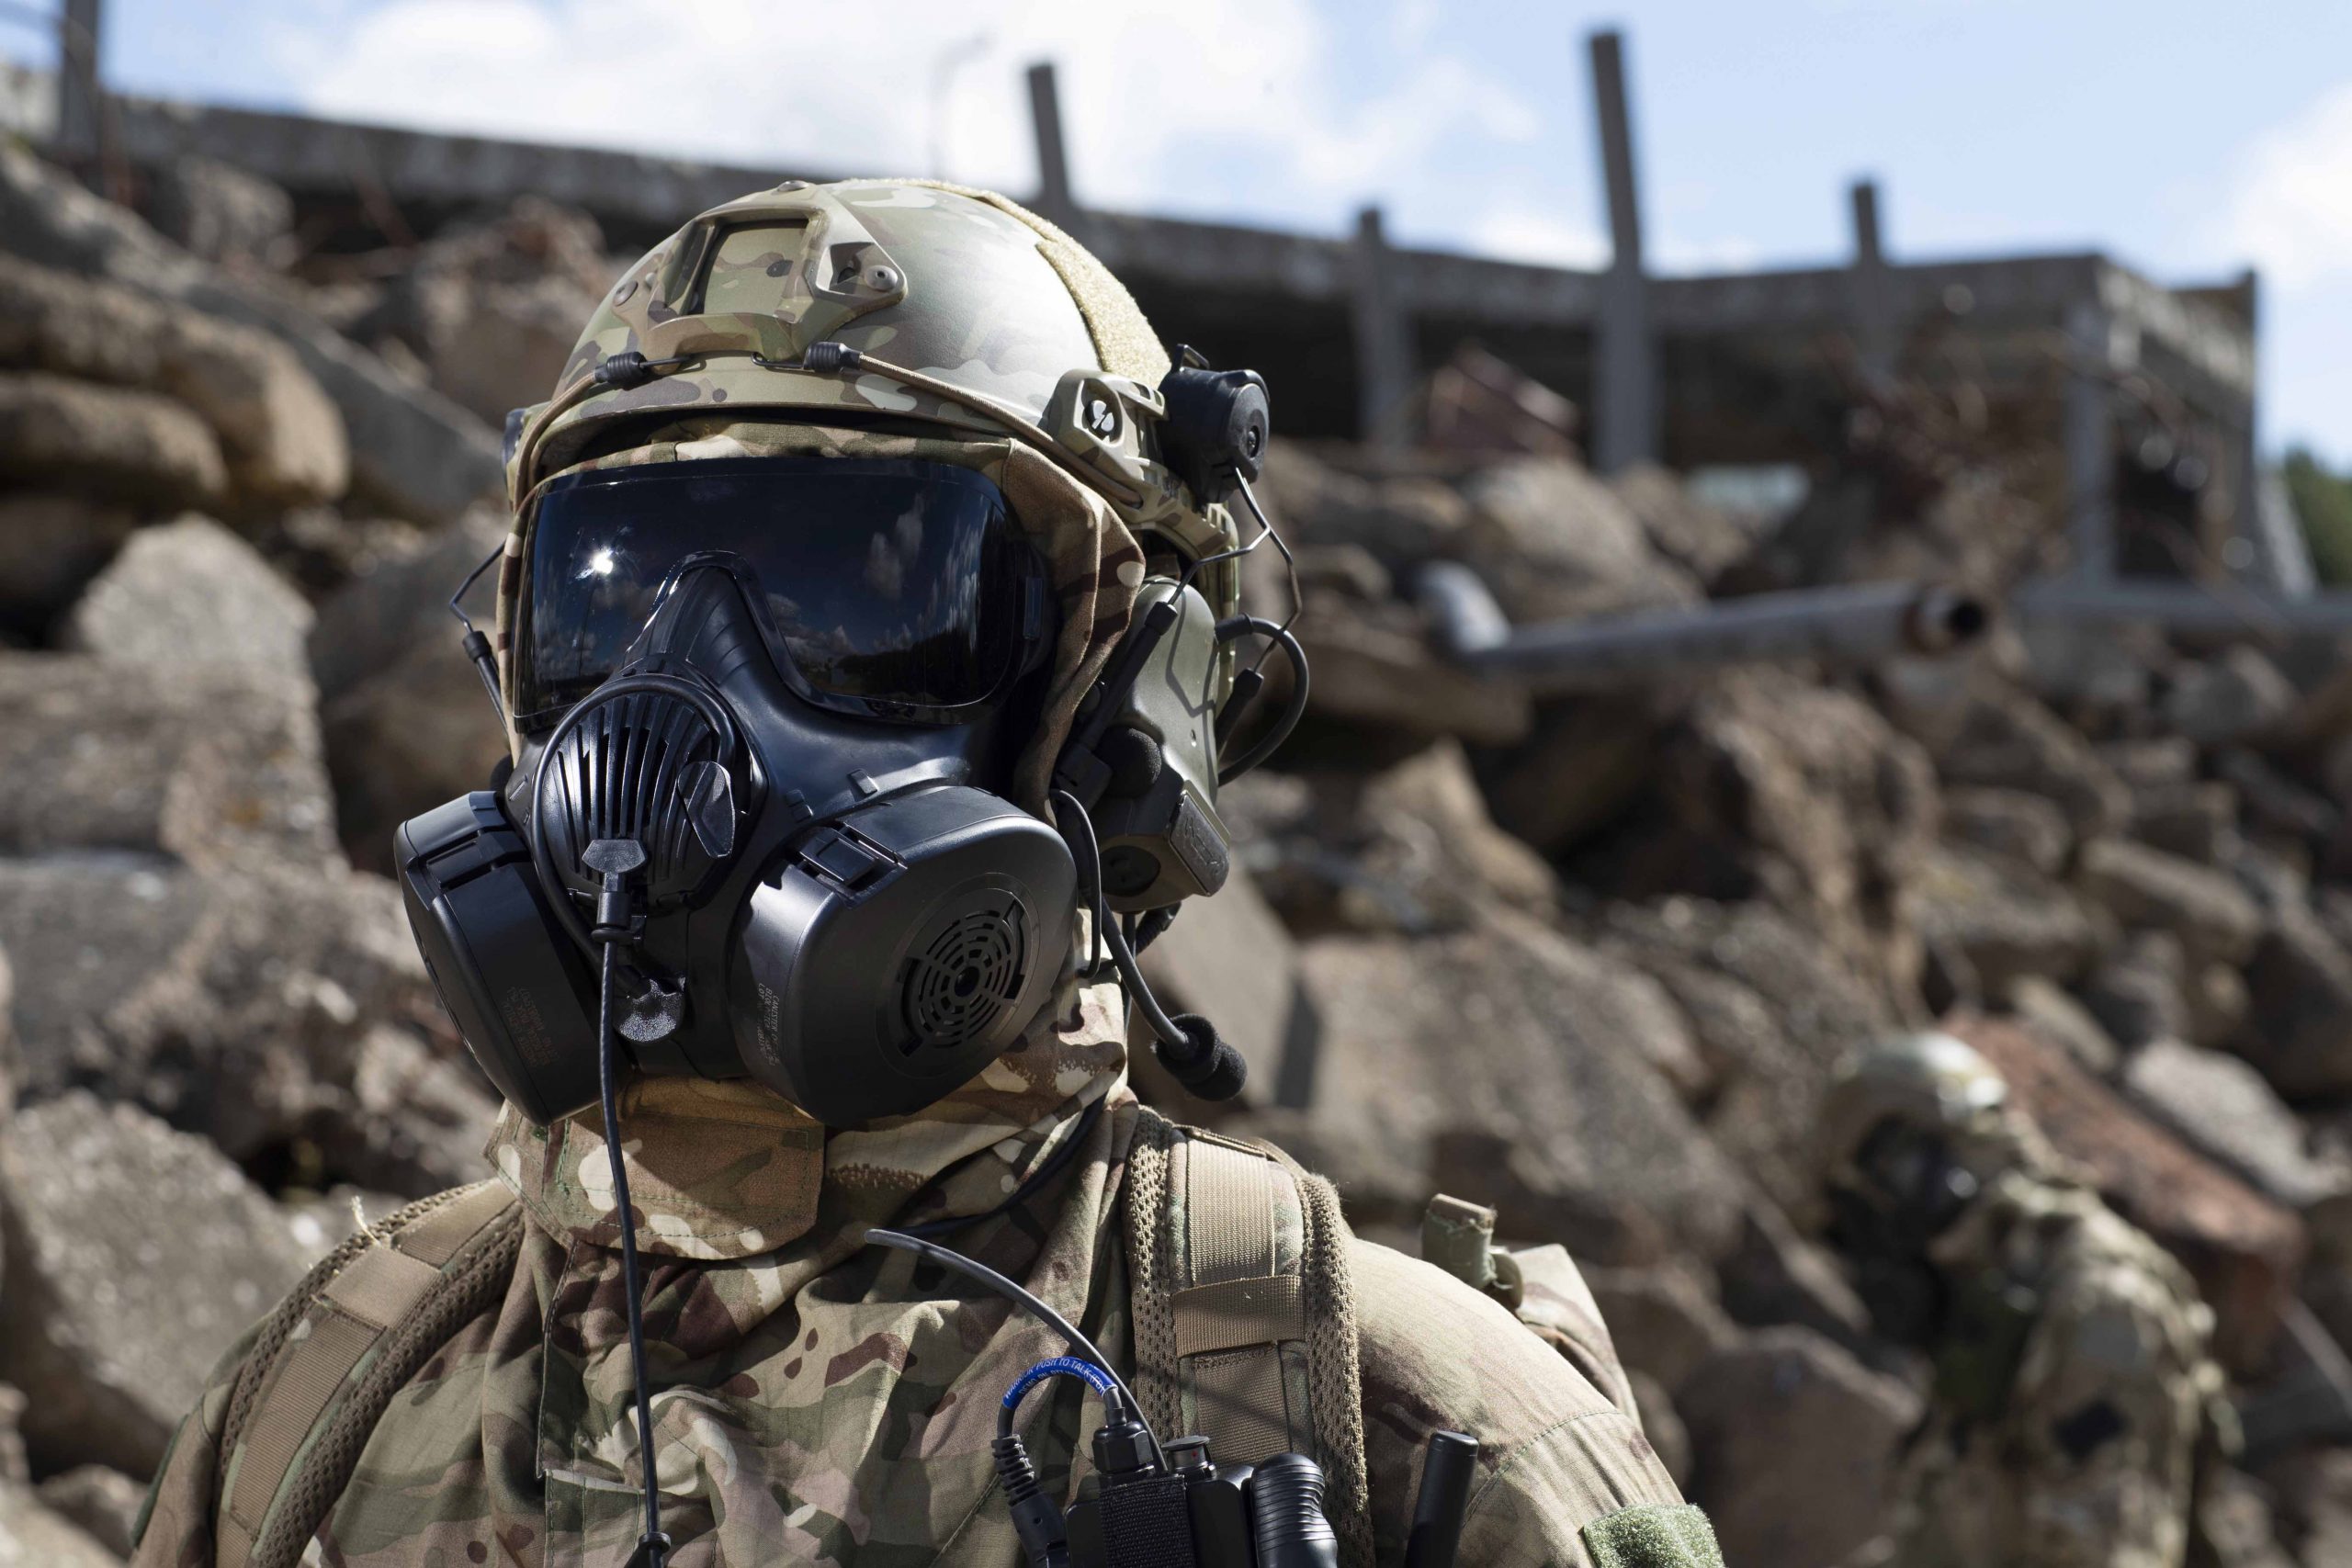 avon m50 gas mask u.s. military